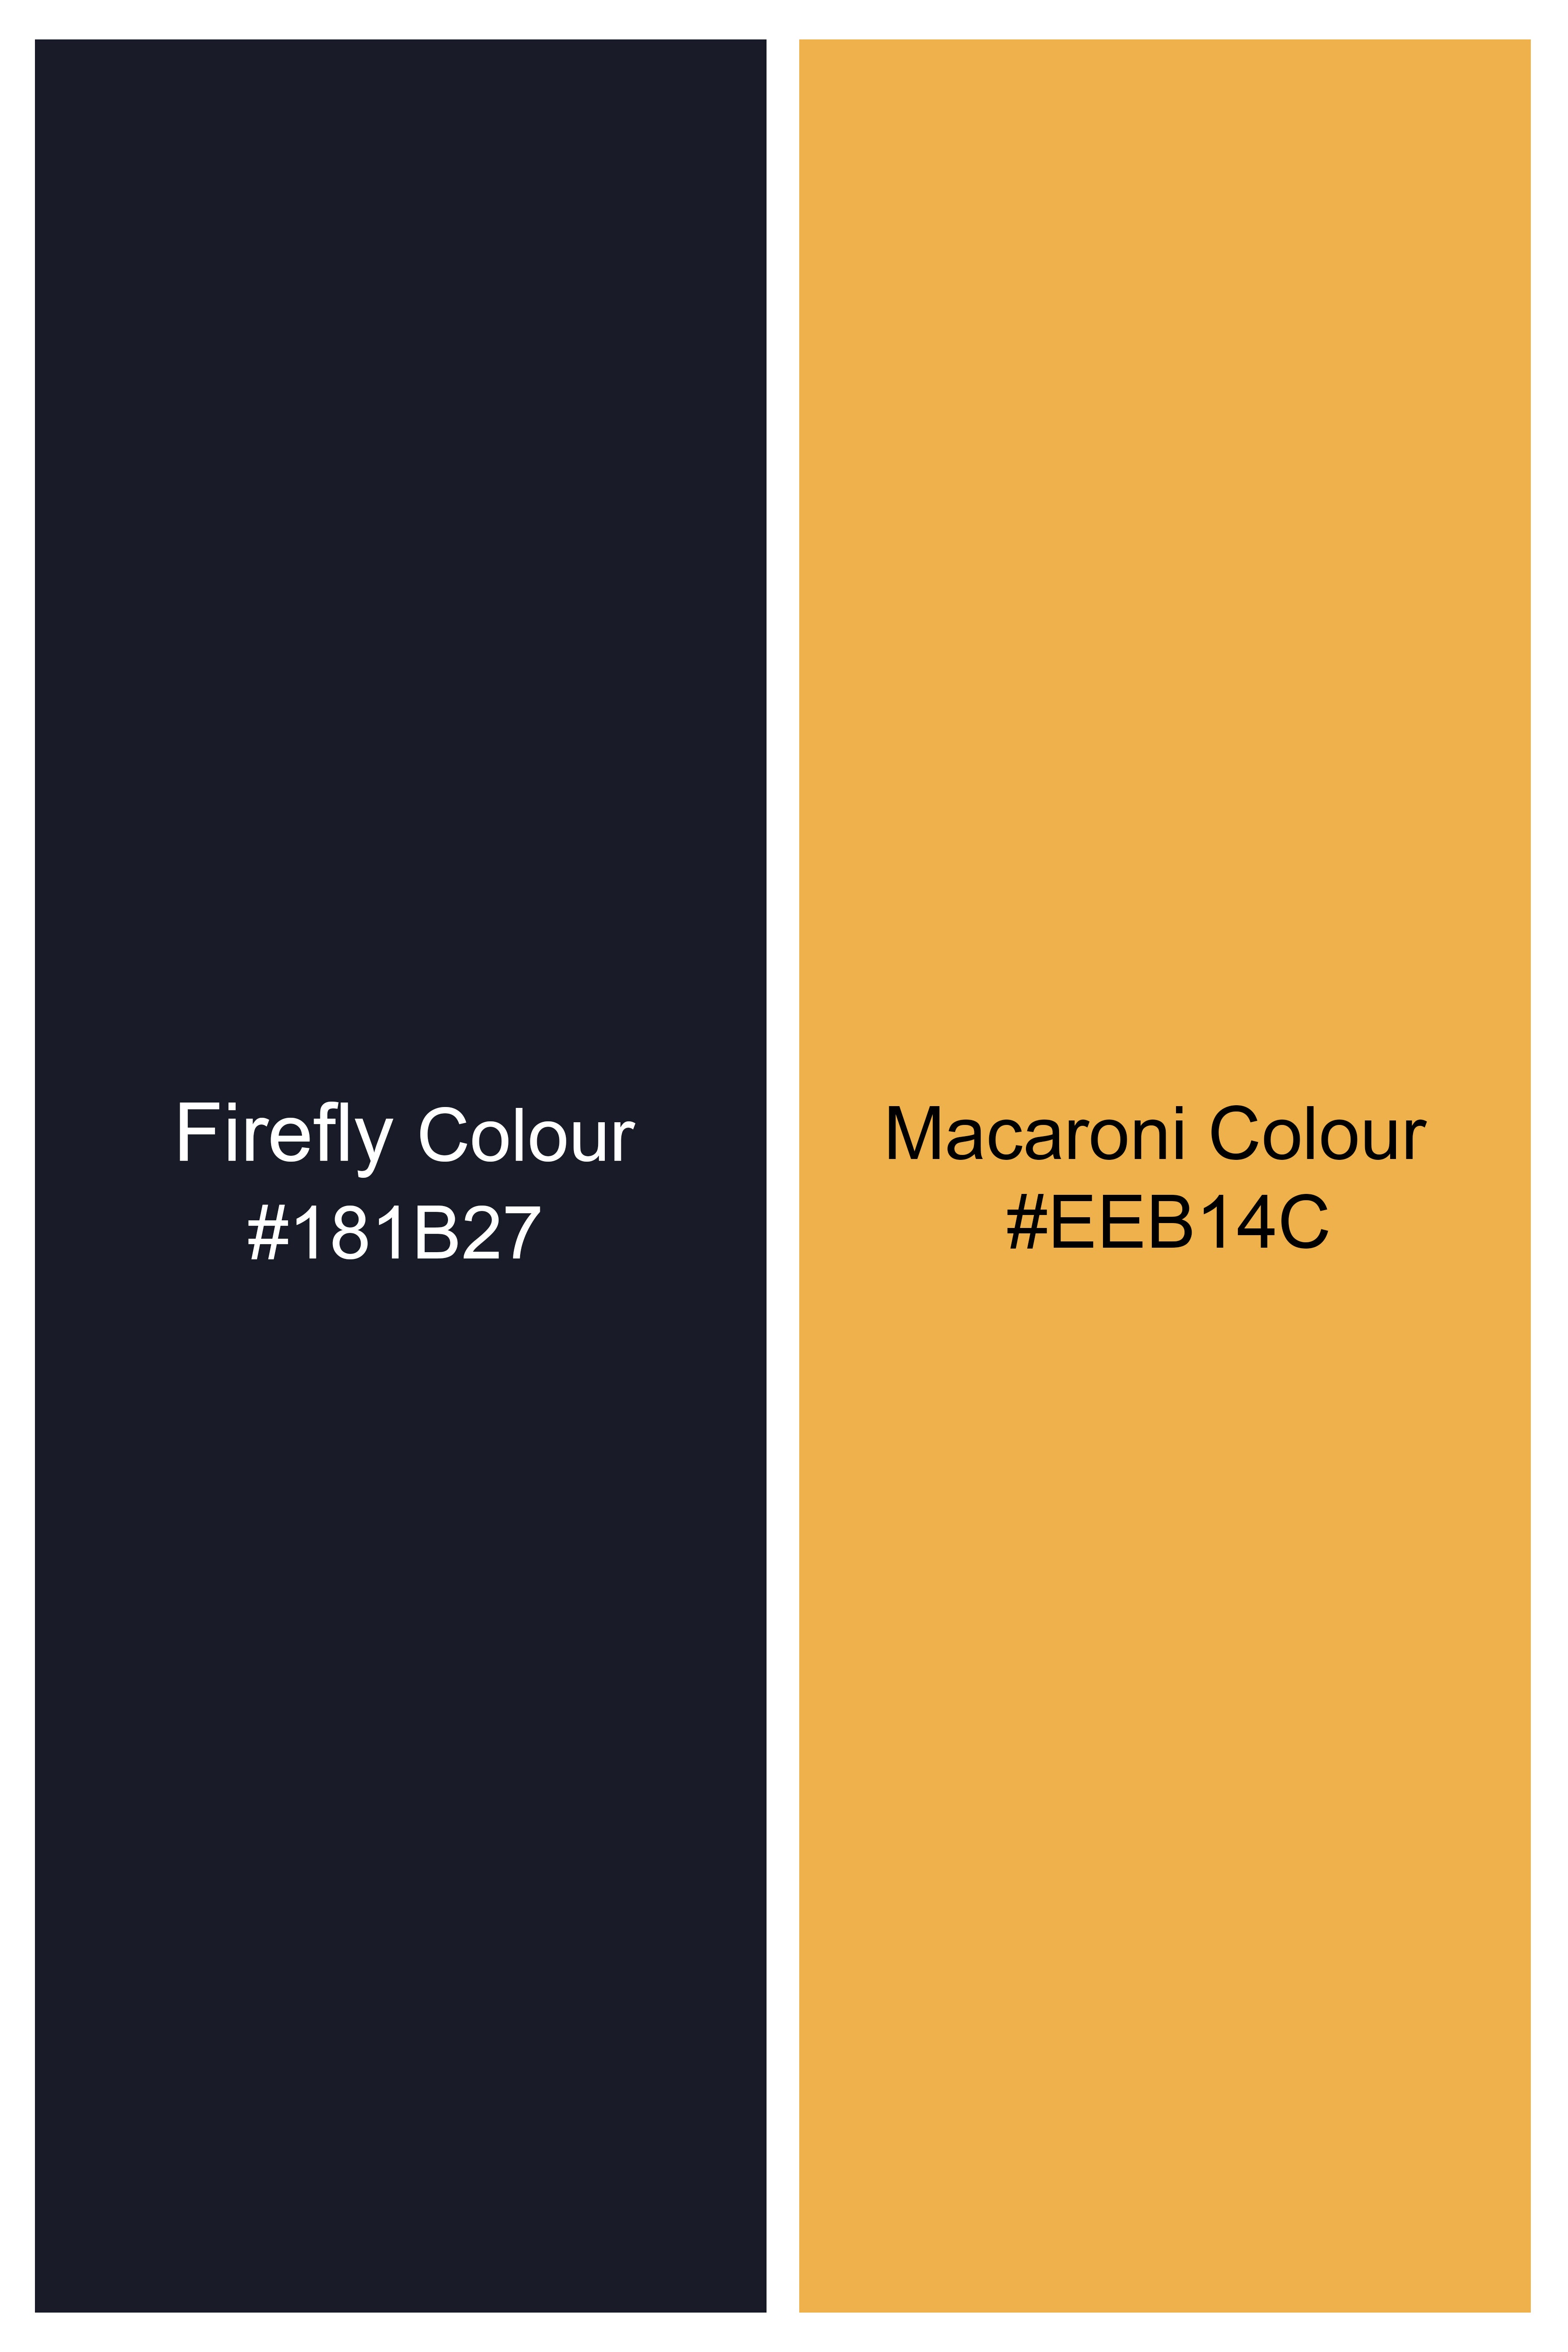 Firefly Blue and Macaroni Orange Dragon Printed Subtle Sheen Super Soft Premium Cotton Designer Shirt 12041-YL-38, 12041-YL-H-38, 12041-YL-39, 12041-YL-H-39, 12041-YL-40, 12041-YL-H-40, 12041-YL-42, 12041-YL-H-42, 12041-YL-44, 12041-YL-H-44, 12041-YL-46, 12041-YL-H-46, 12041-YL-48, 12041-YL-H-48, 12041-YL-50, 12041-YL-H-50, 12041-YL-52, 12041-YL-H-52